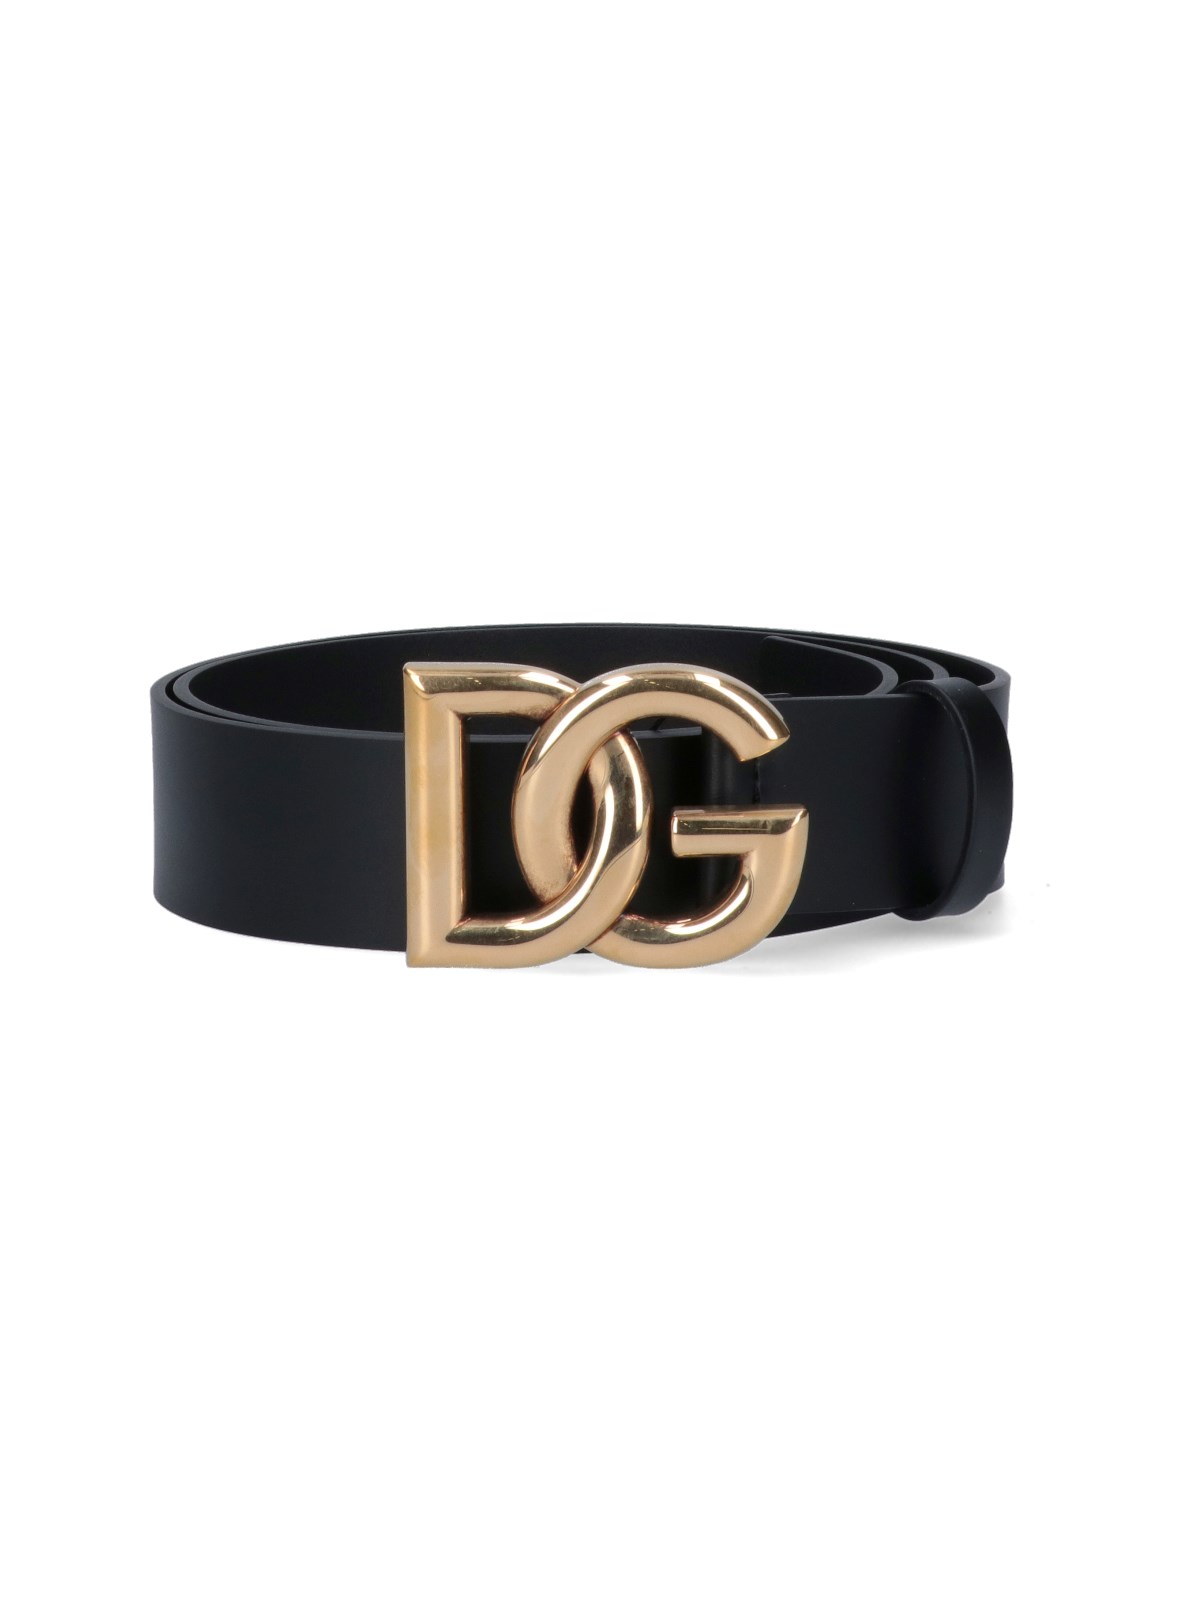 Dolce & Gabbana 'dg' Buckle Belt In Black  